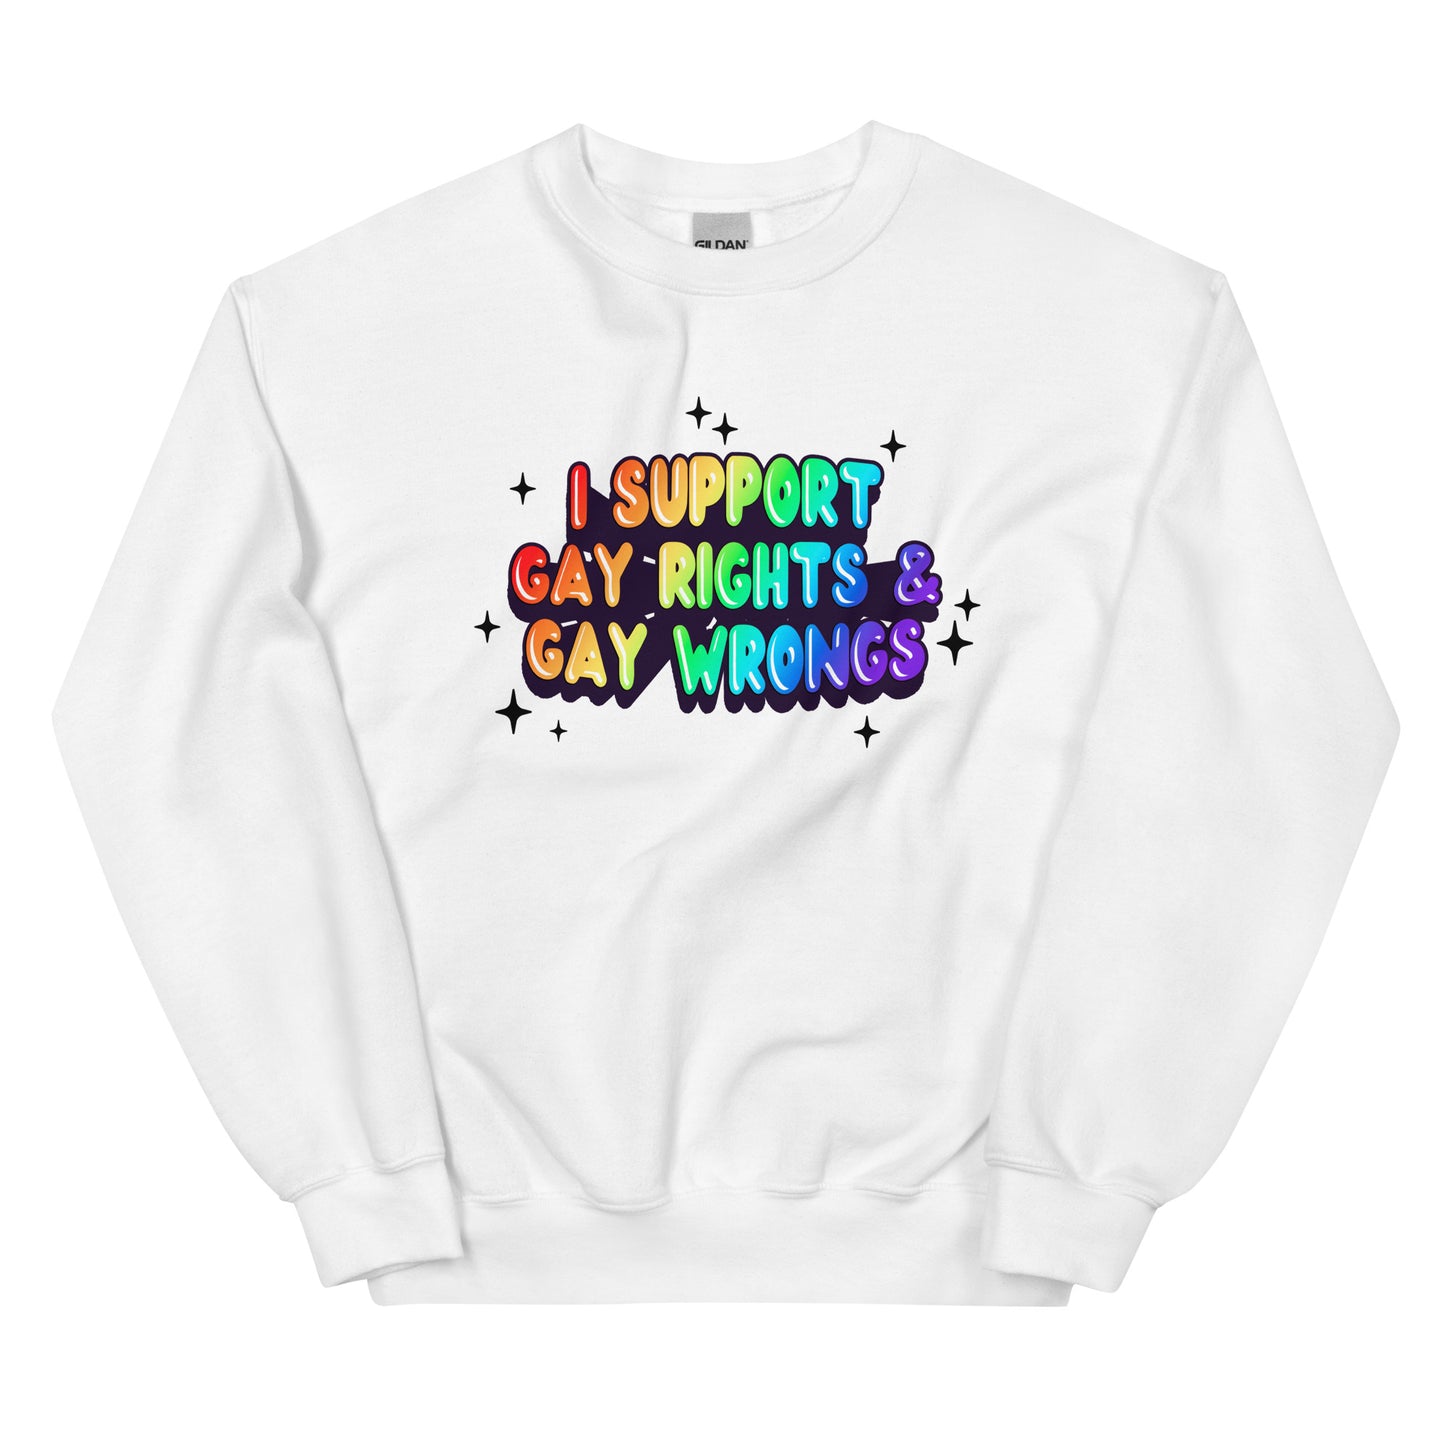 I Support Gay Rights & Gay Wrongs Unisex Sweatshirt